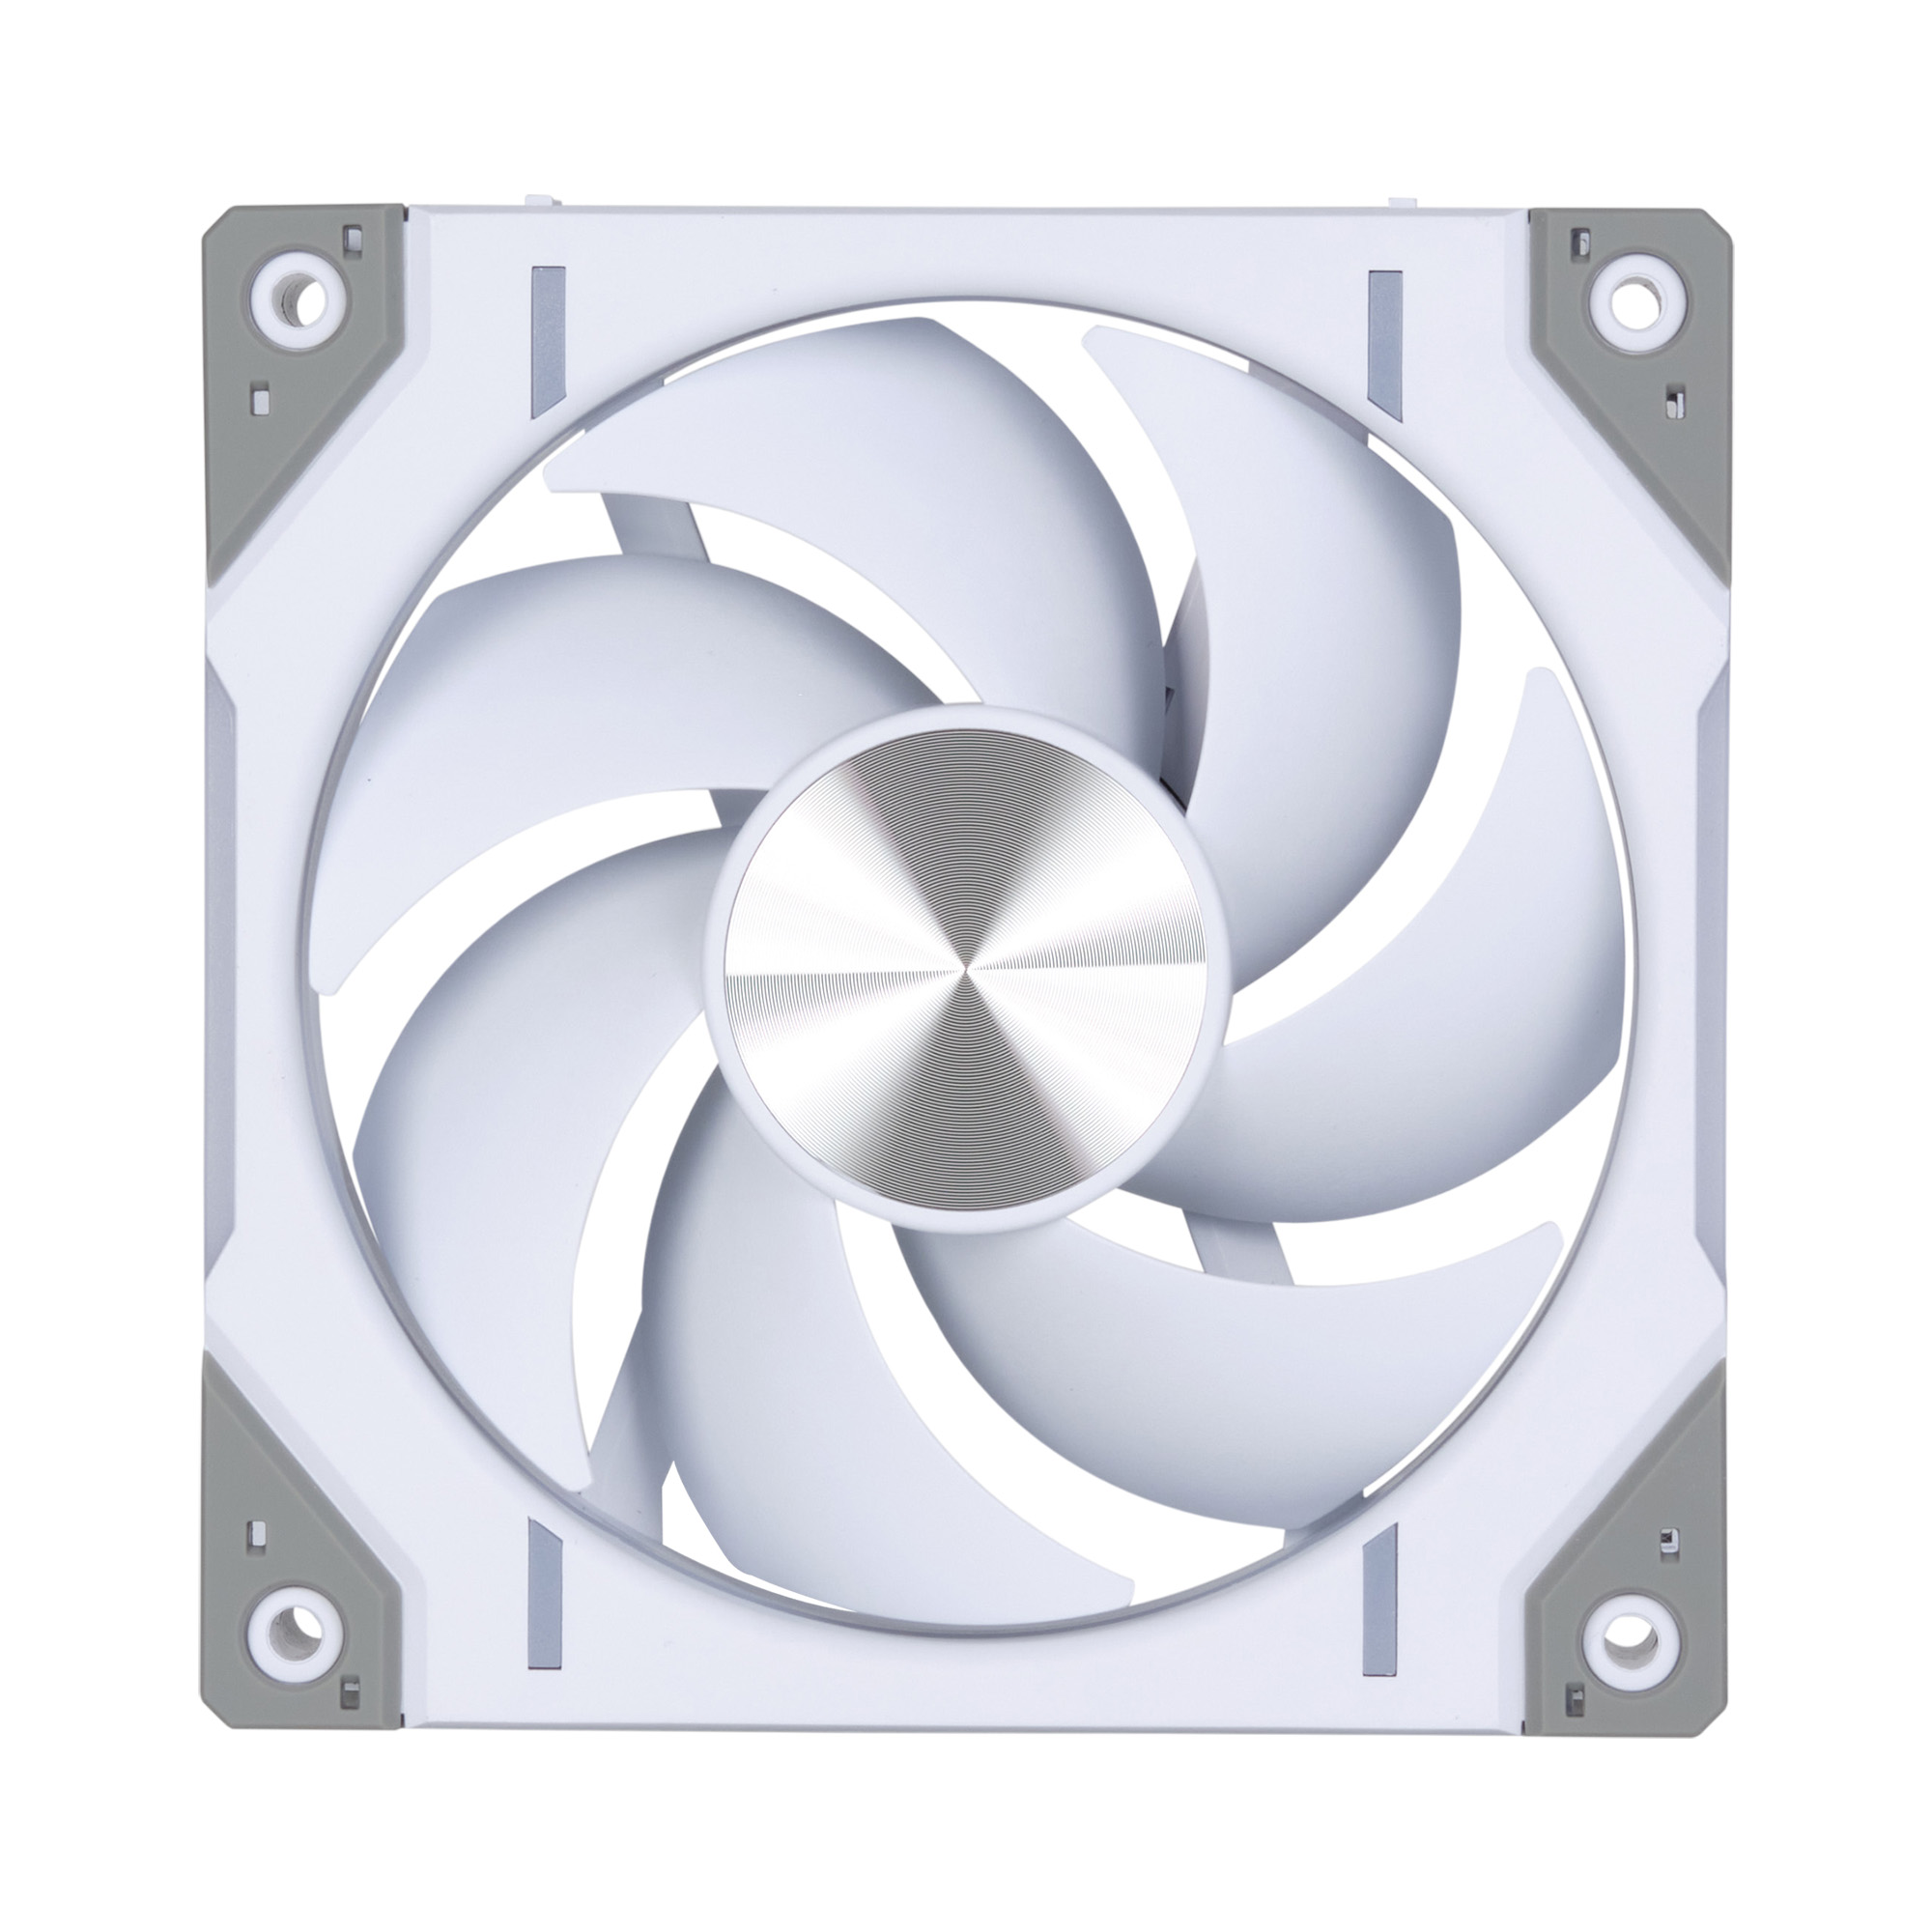 Вентилятор PHANTEKS D30 DRGB White 120x120x30мм (PWM, 20шт./кор, 250-2000 об/мин, 30.2dBa) / PH-F120D30_DRGB_PWM_WT01_RU